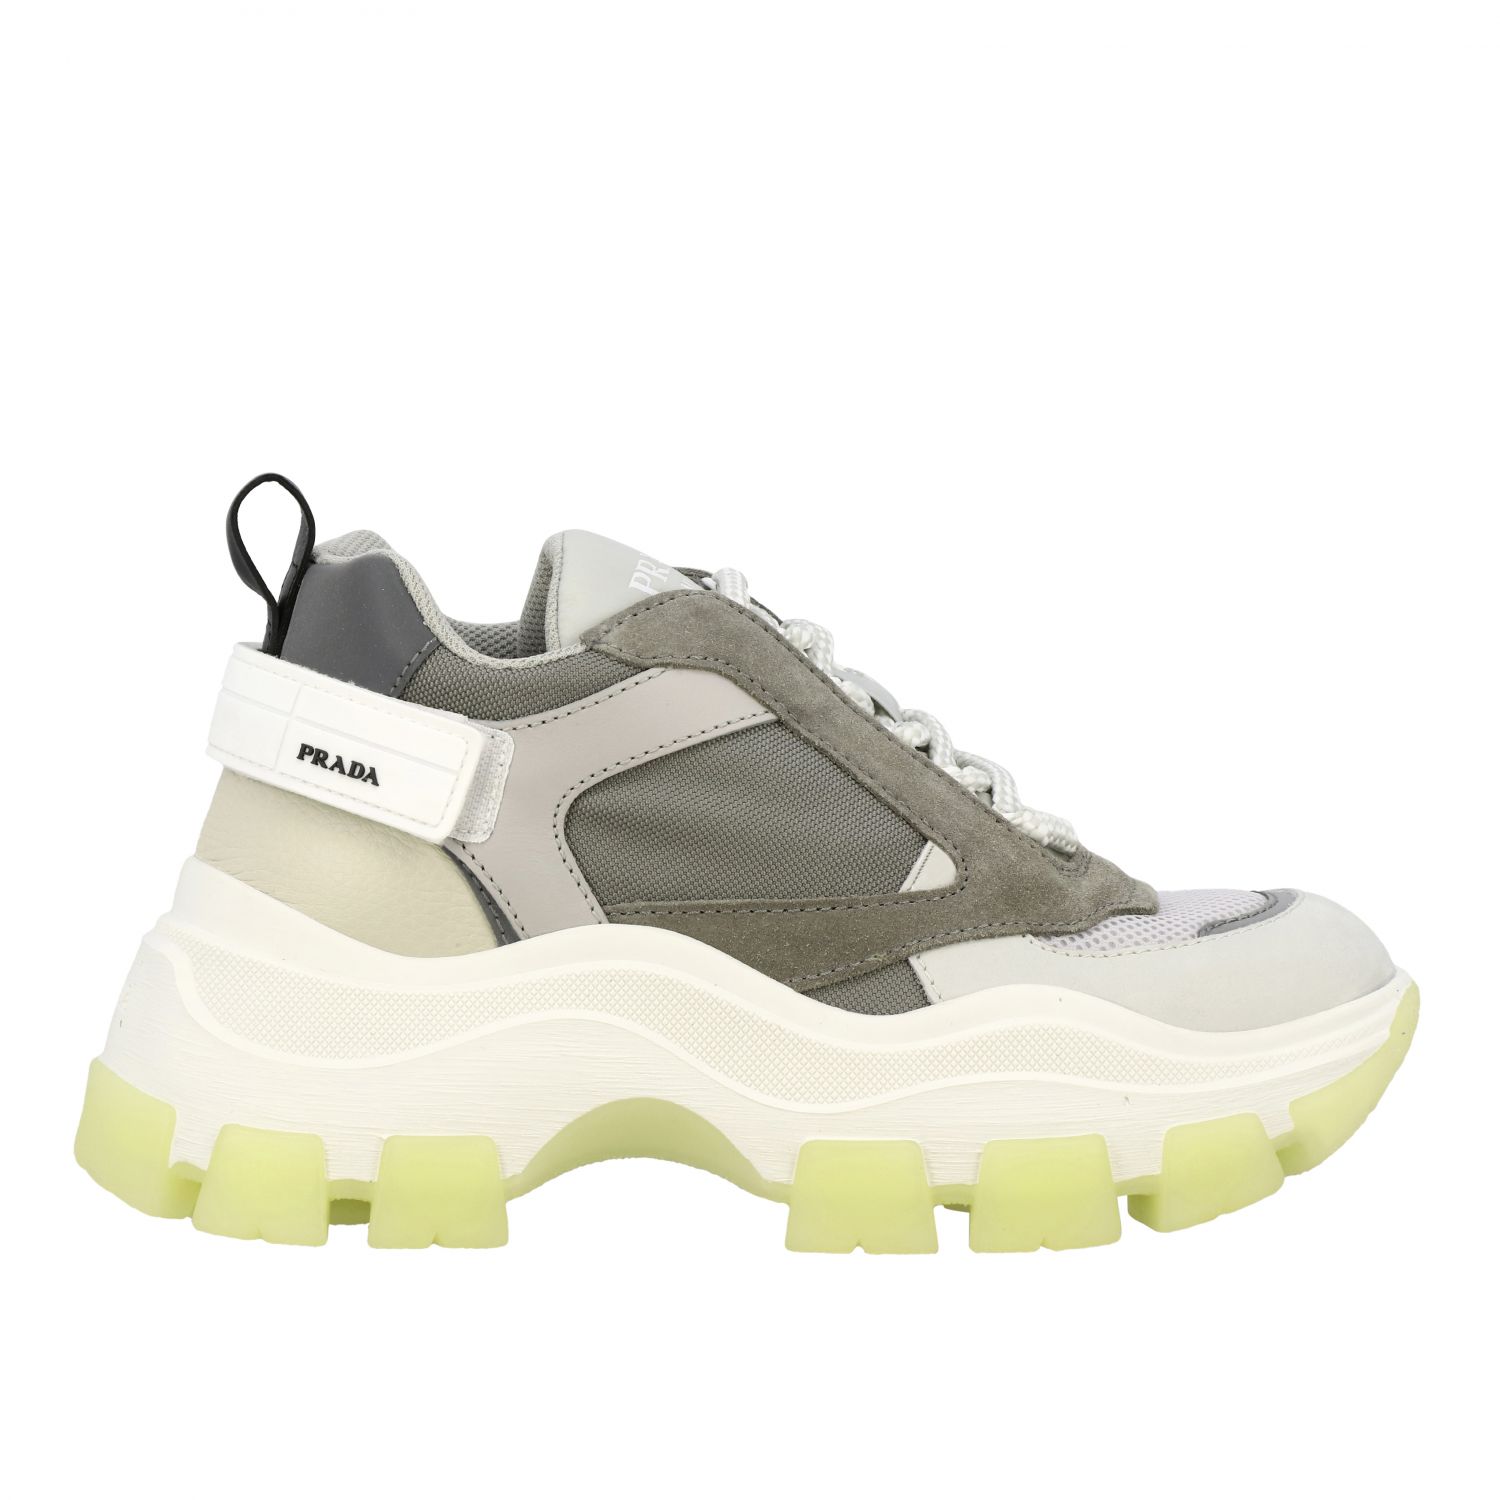 Verdrag lijst Evenement PRADA: New chunky sneakers in suede leather and mesh - Grey | Prada sneakers  2EE324 8RE online on GIGLIO.COM